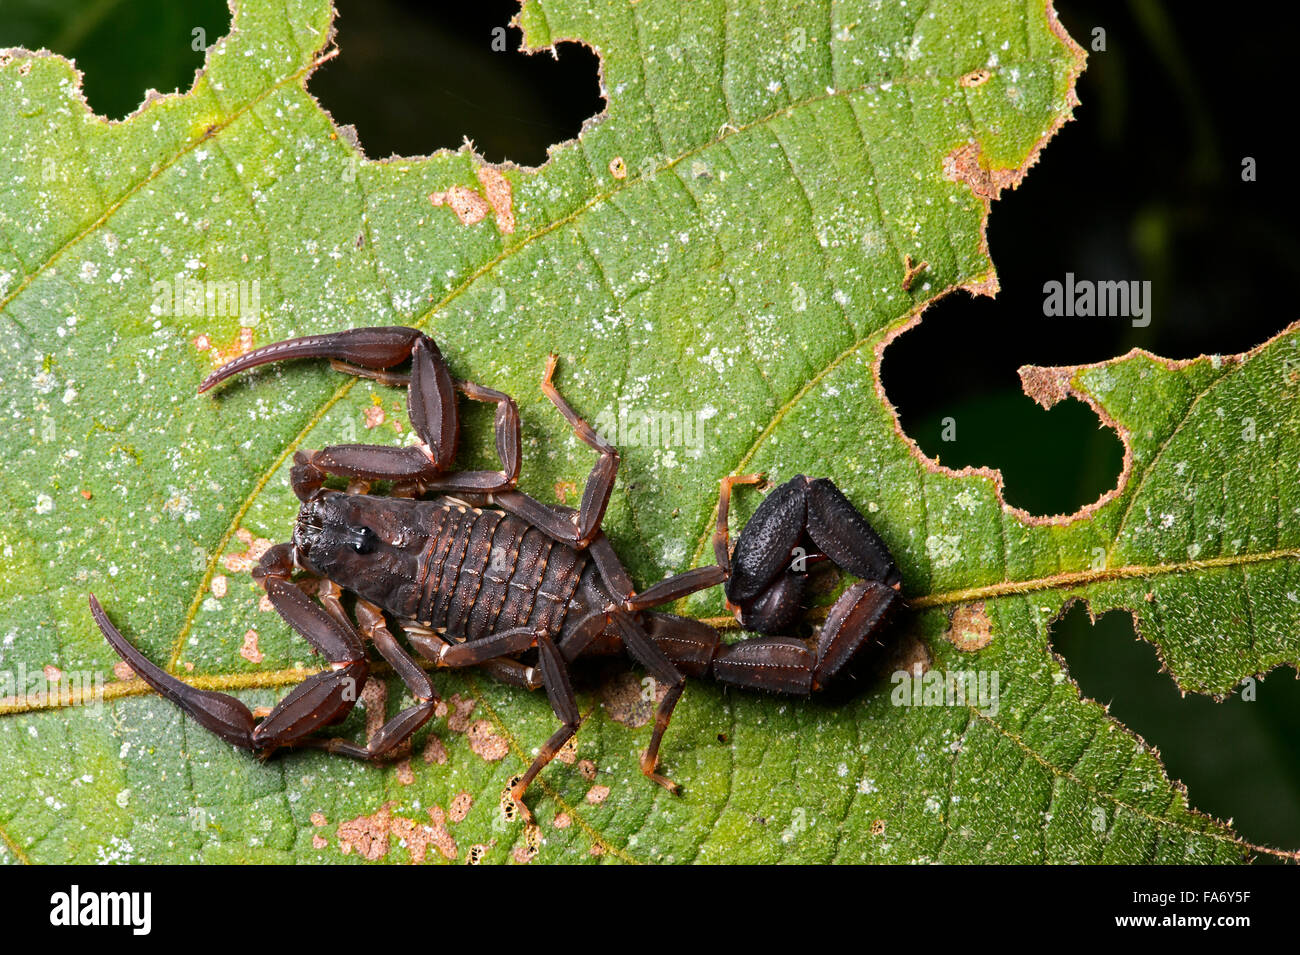 Neotropical Scorpio (chactidae family), Chocó rainforest, Ecuador Stock Photo